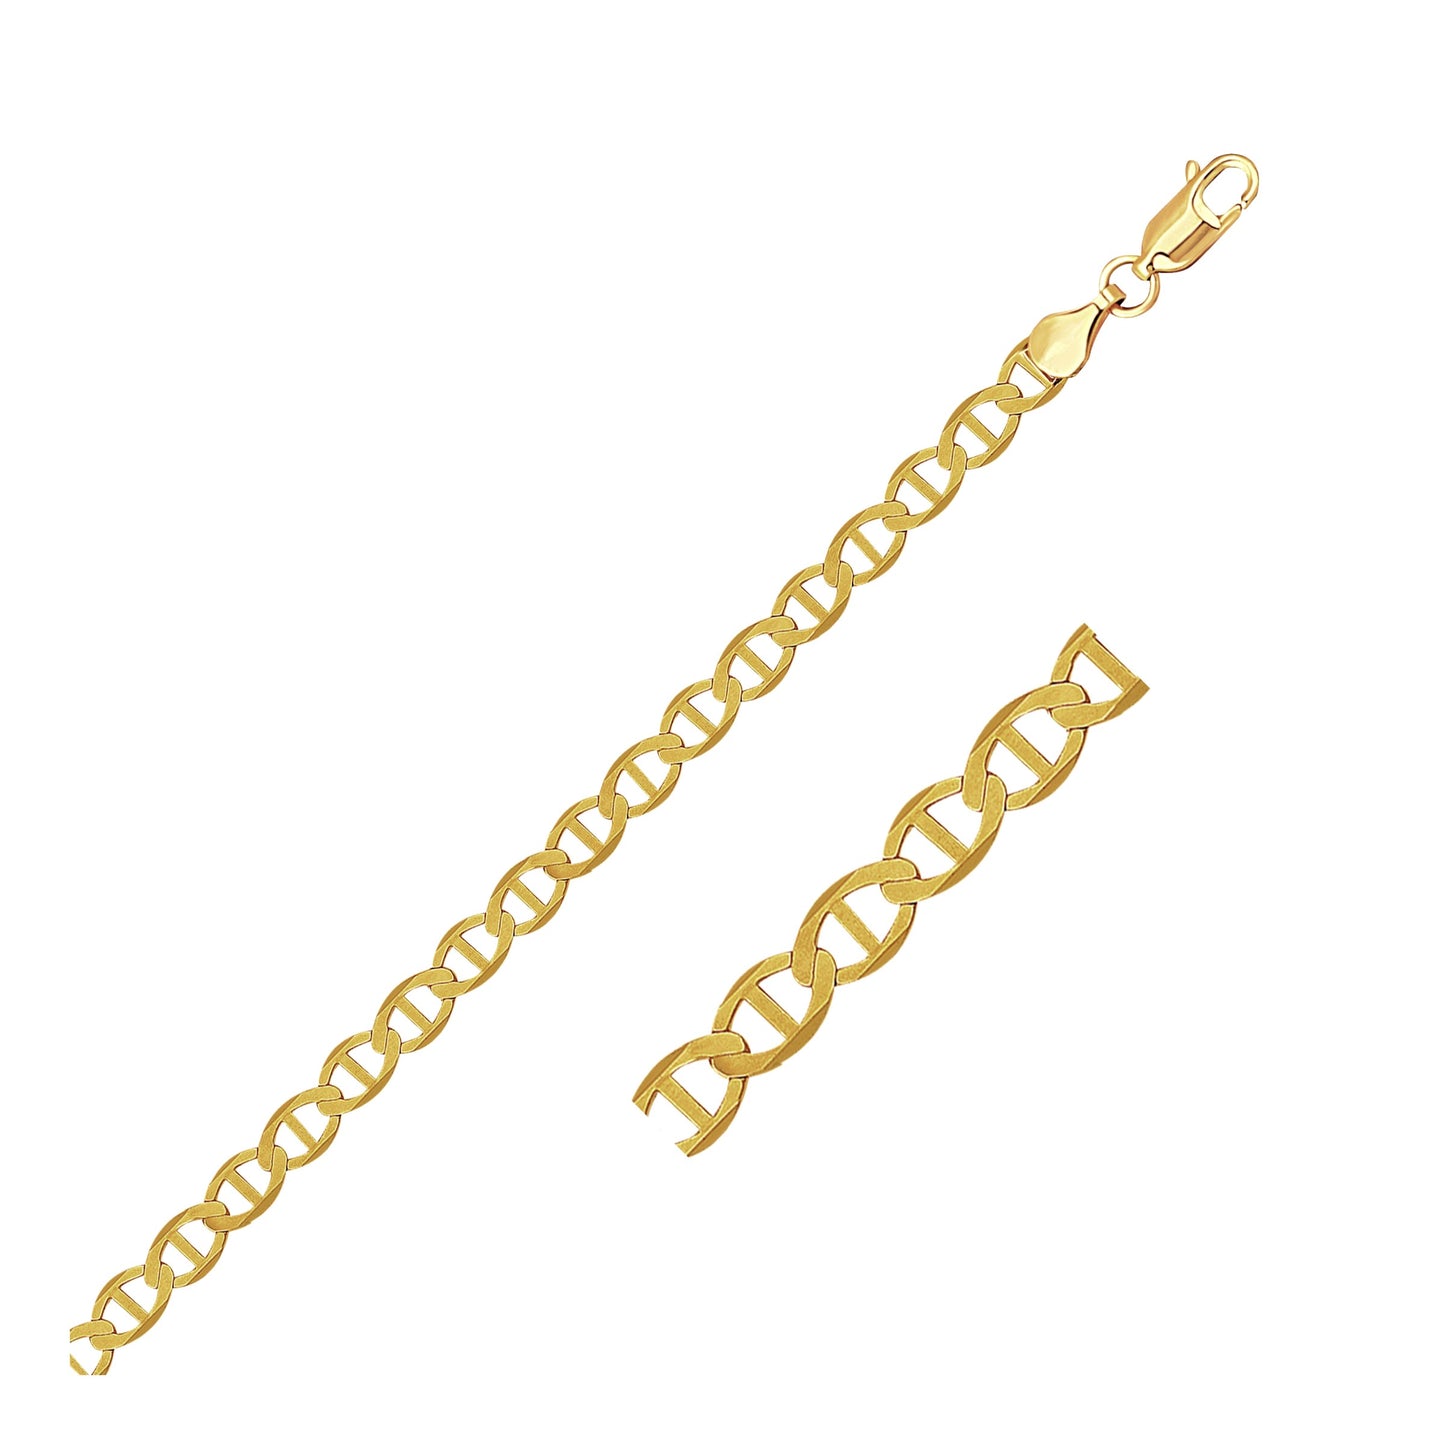 4.5mm 14k Yellow Gold Mariner Link Bracelet